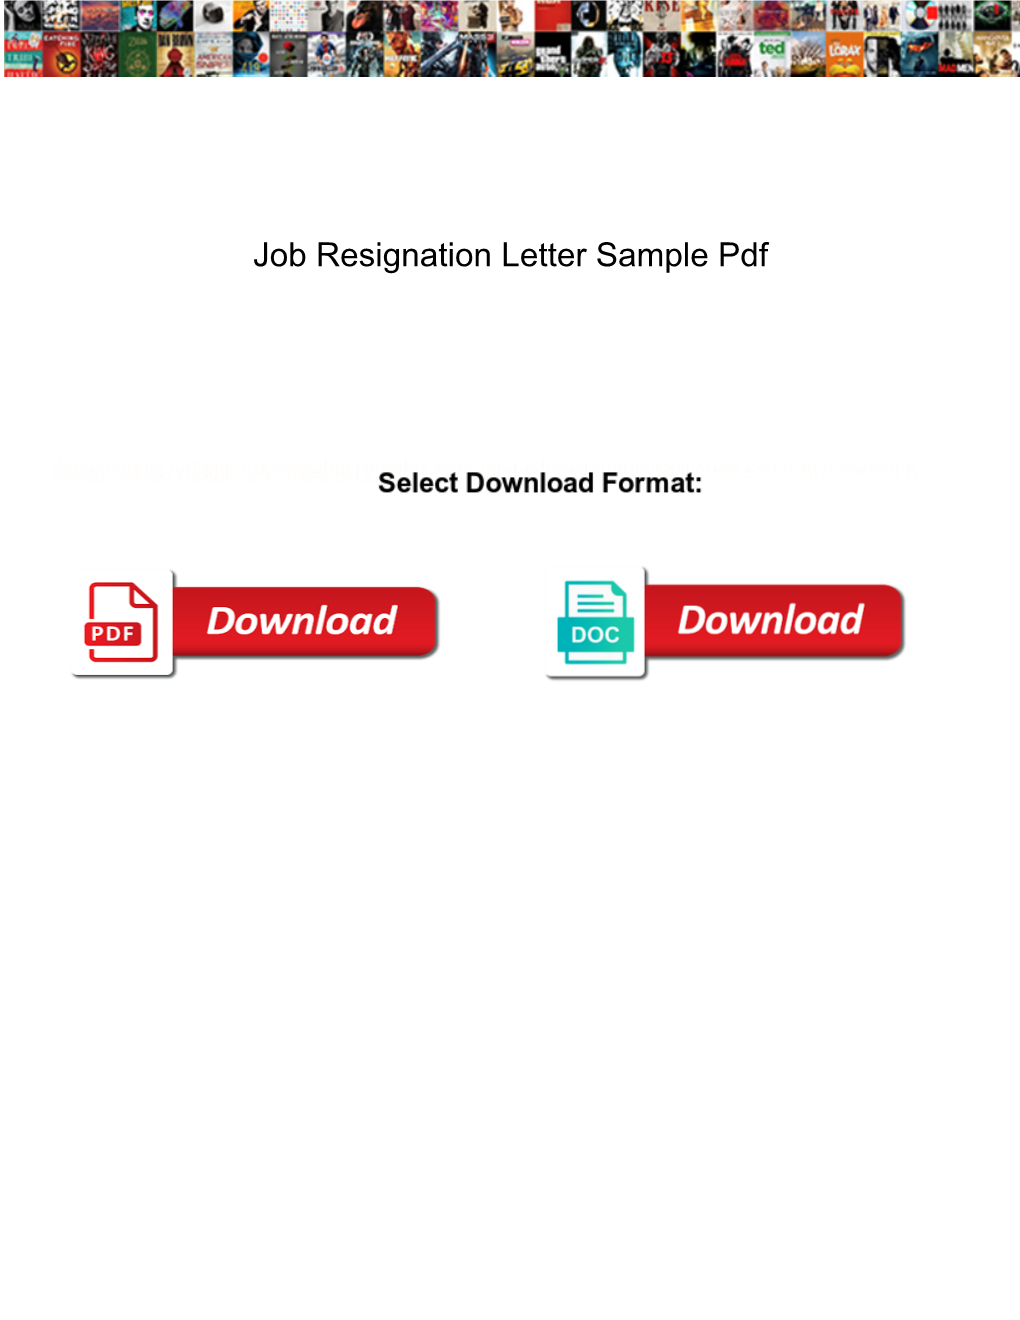 Job Resignation Letter Sample Pdf